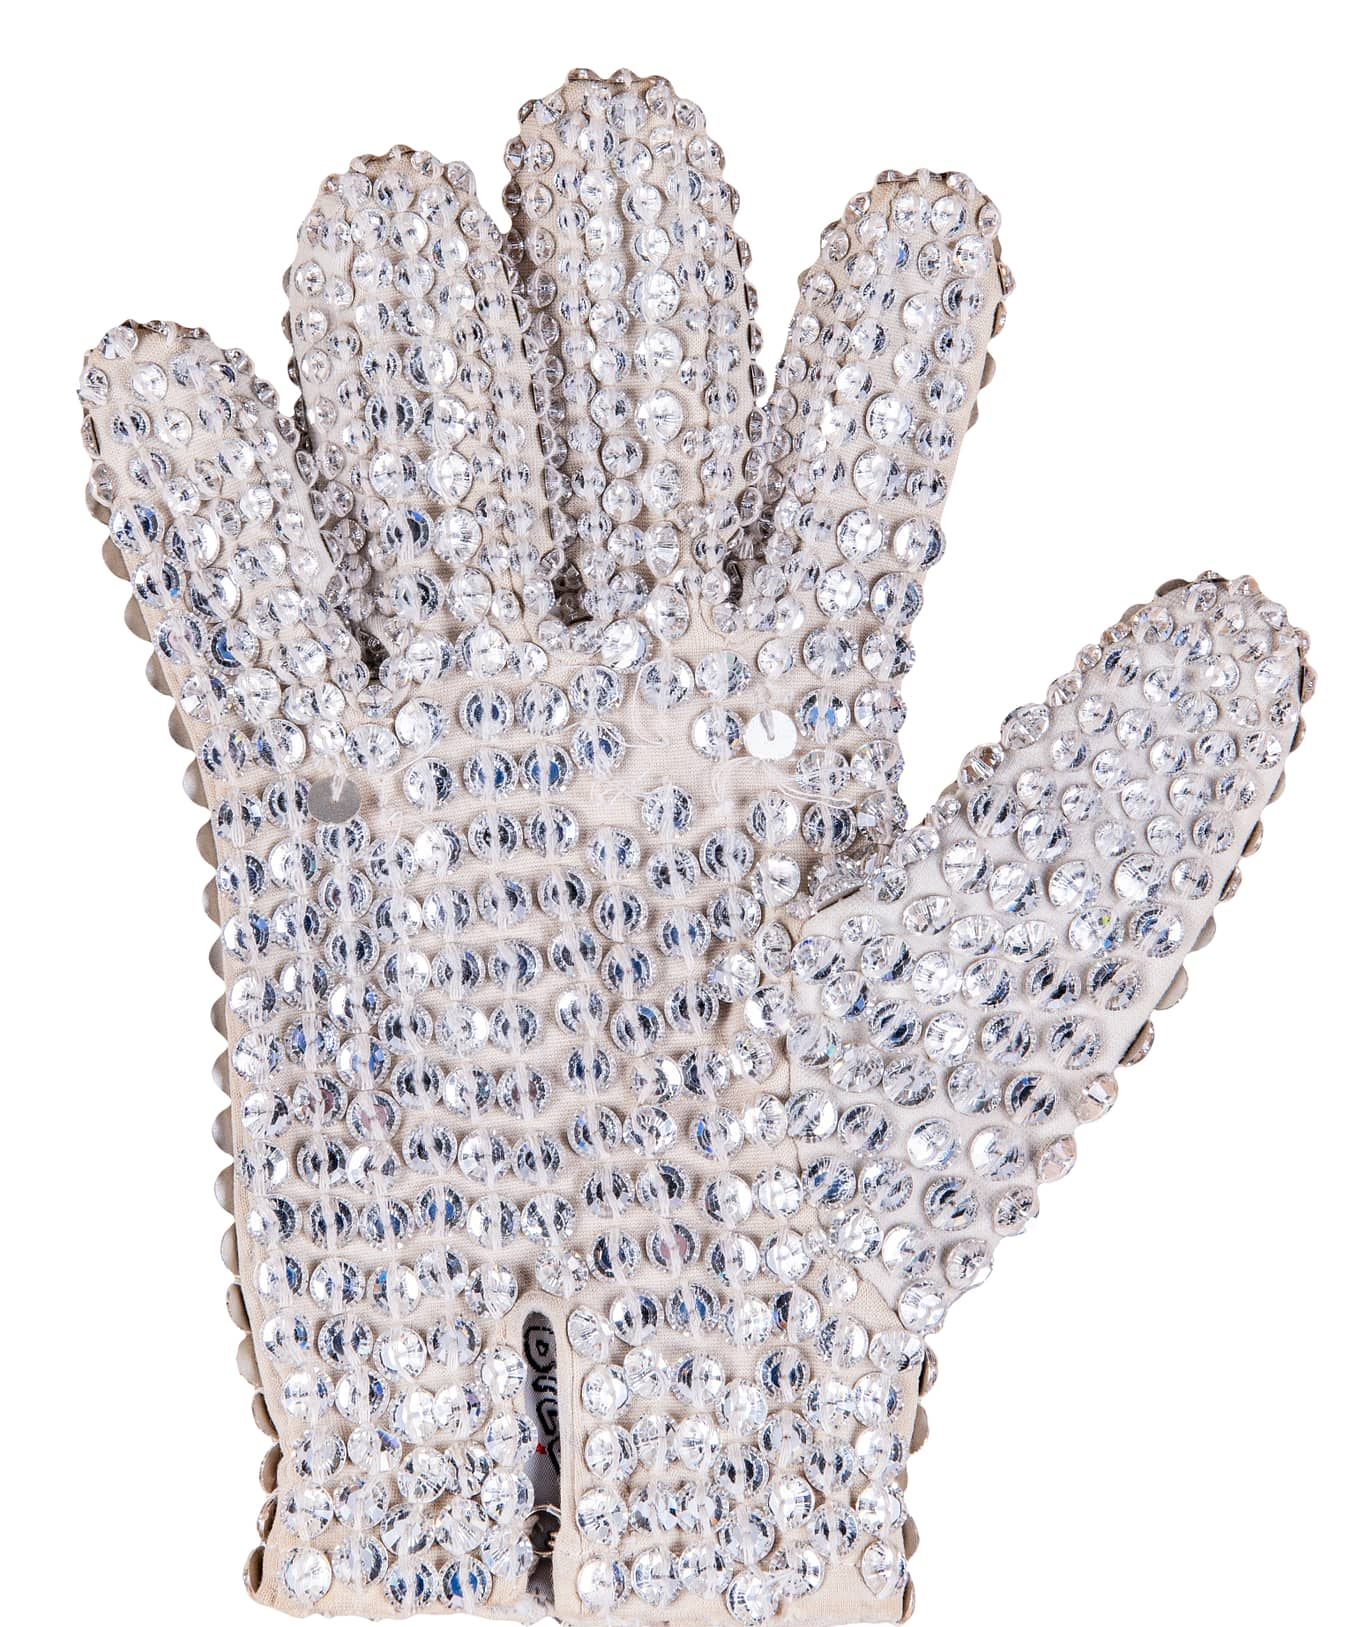 Michael Jackson's Victory Tour Glove for grab! - MJVibe